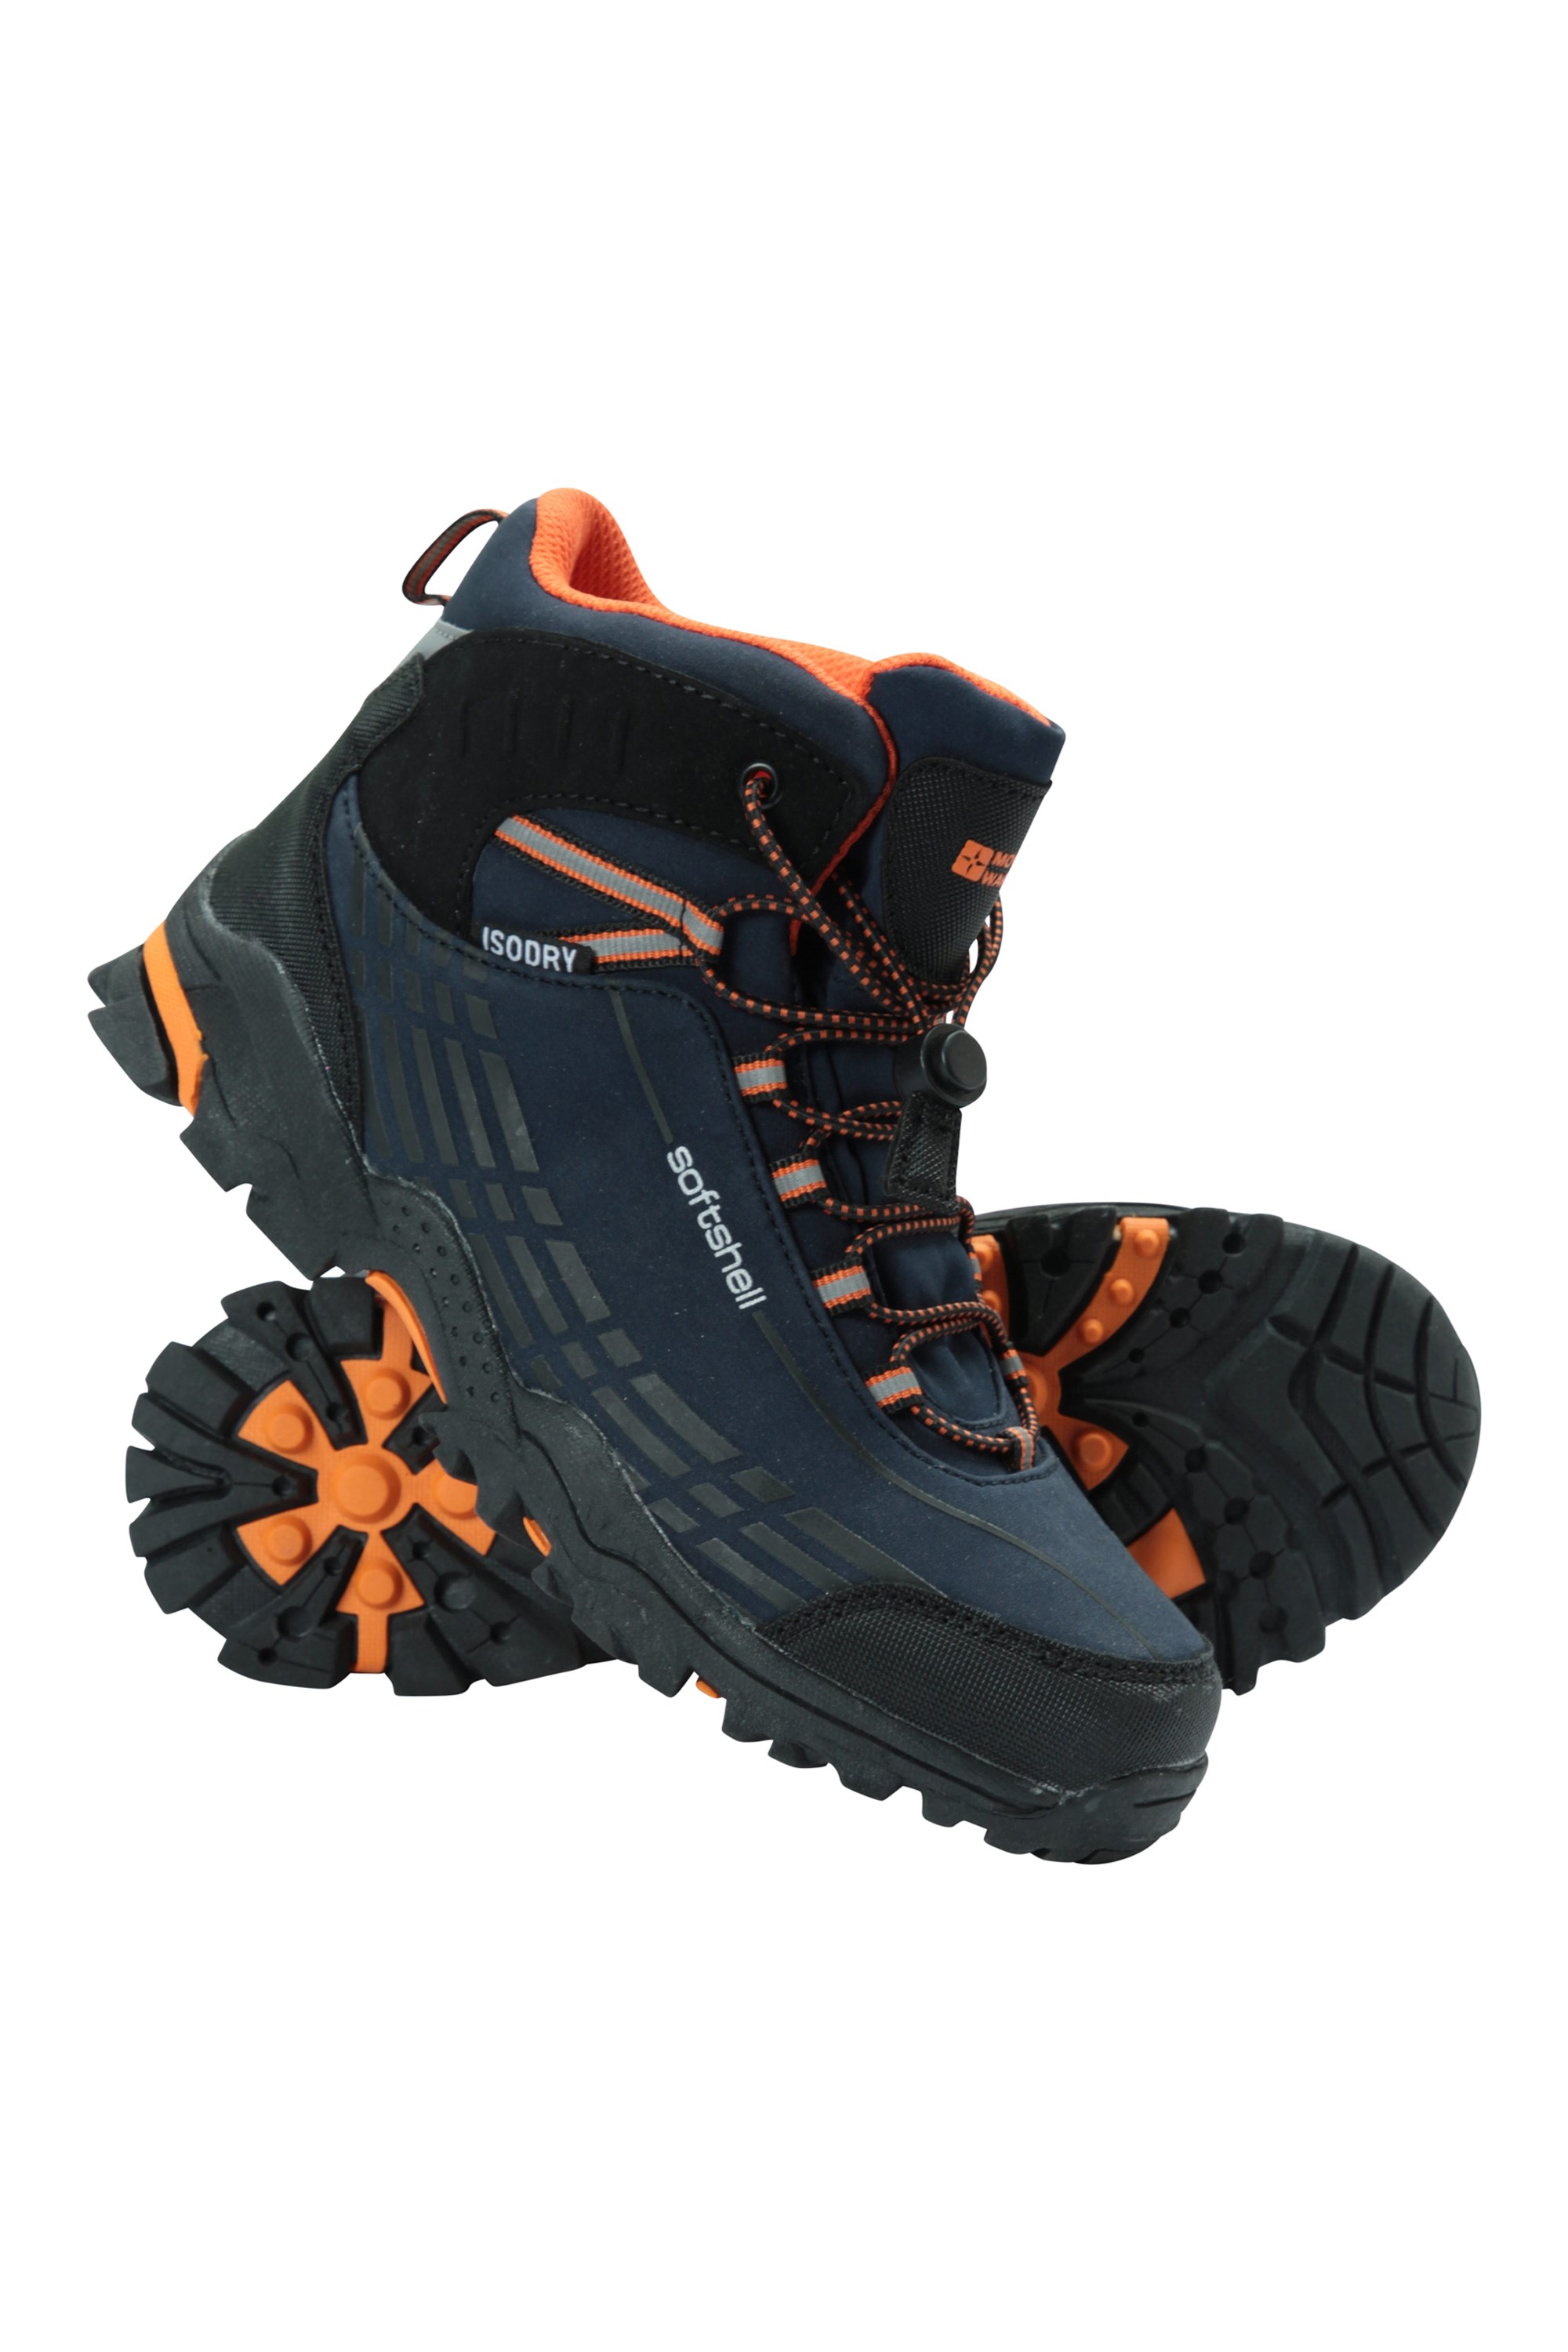 Softshell Kids Walking Boots | Mountain Warehouse GB